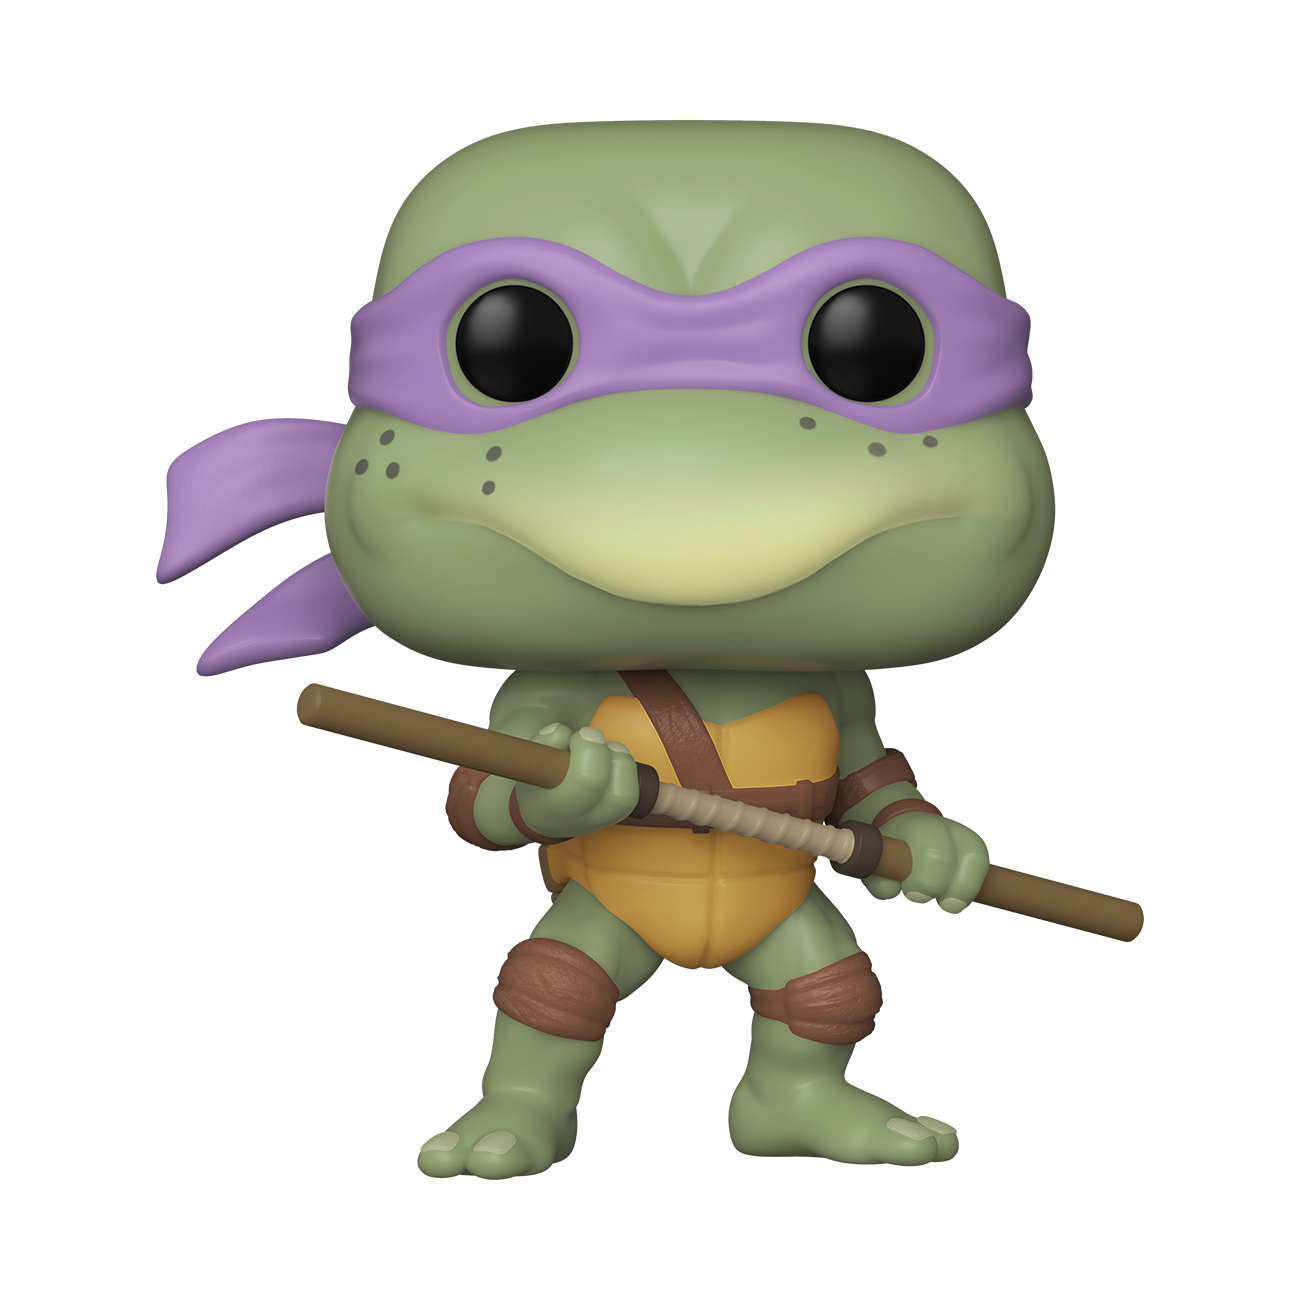 Funko Pop Animation: TMNT Tortugas Ninja - Donatello